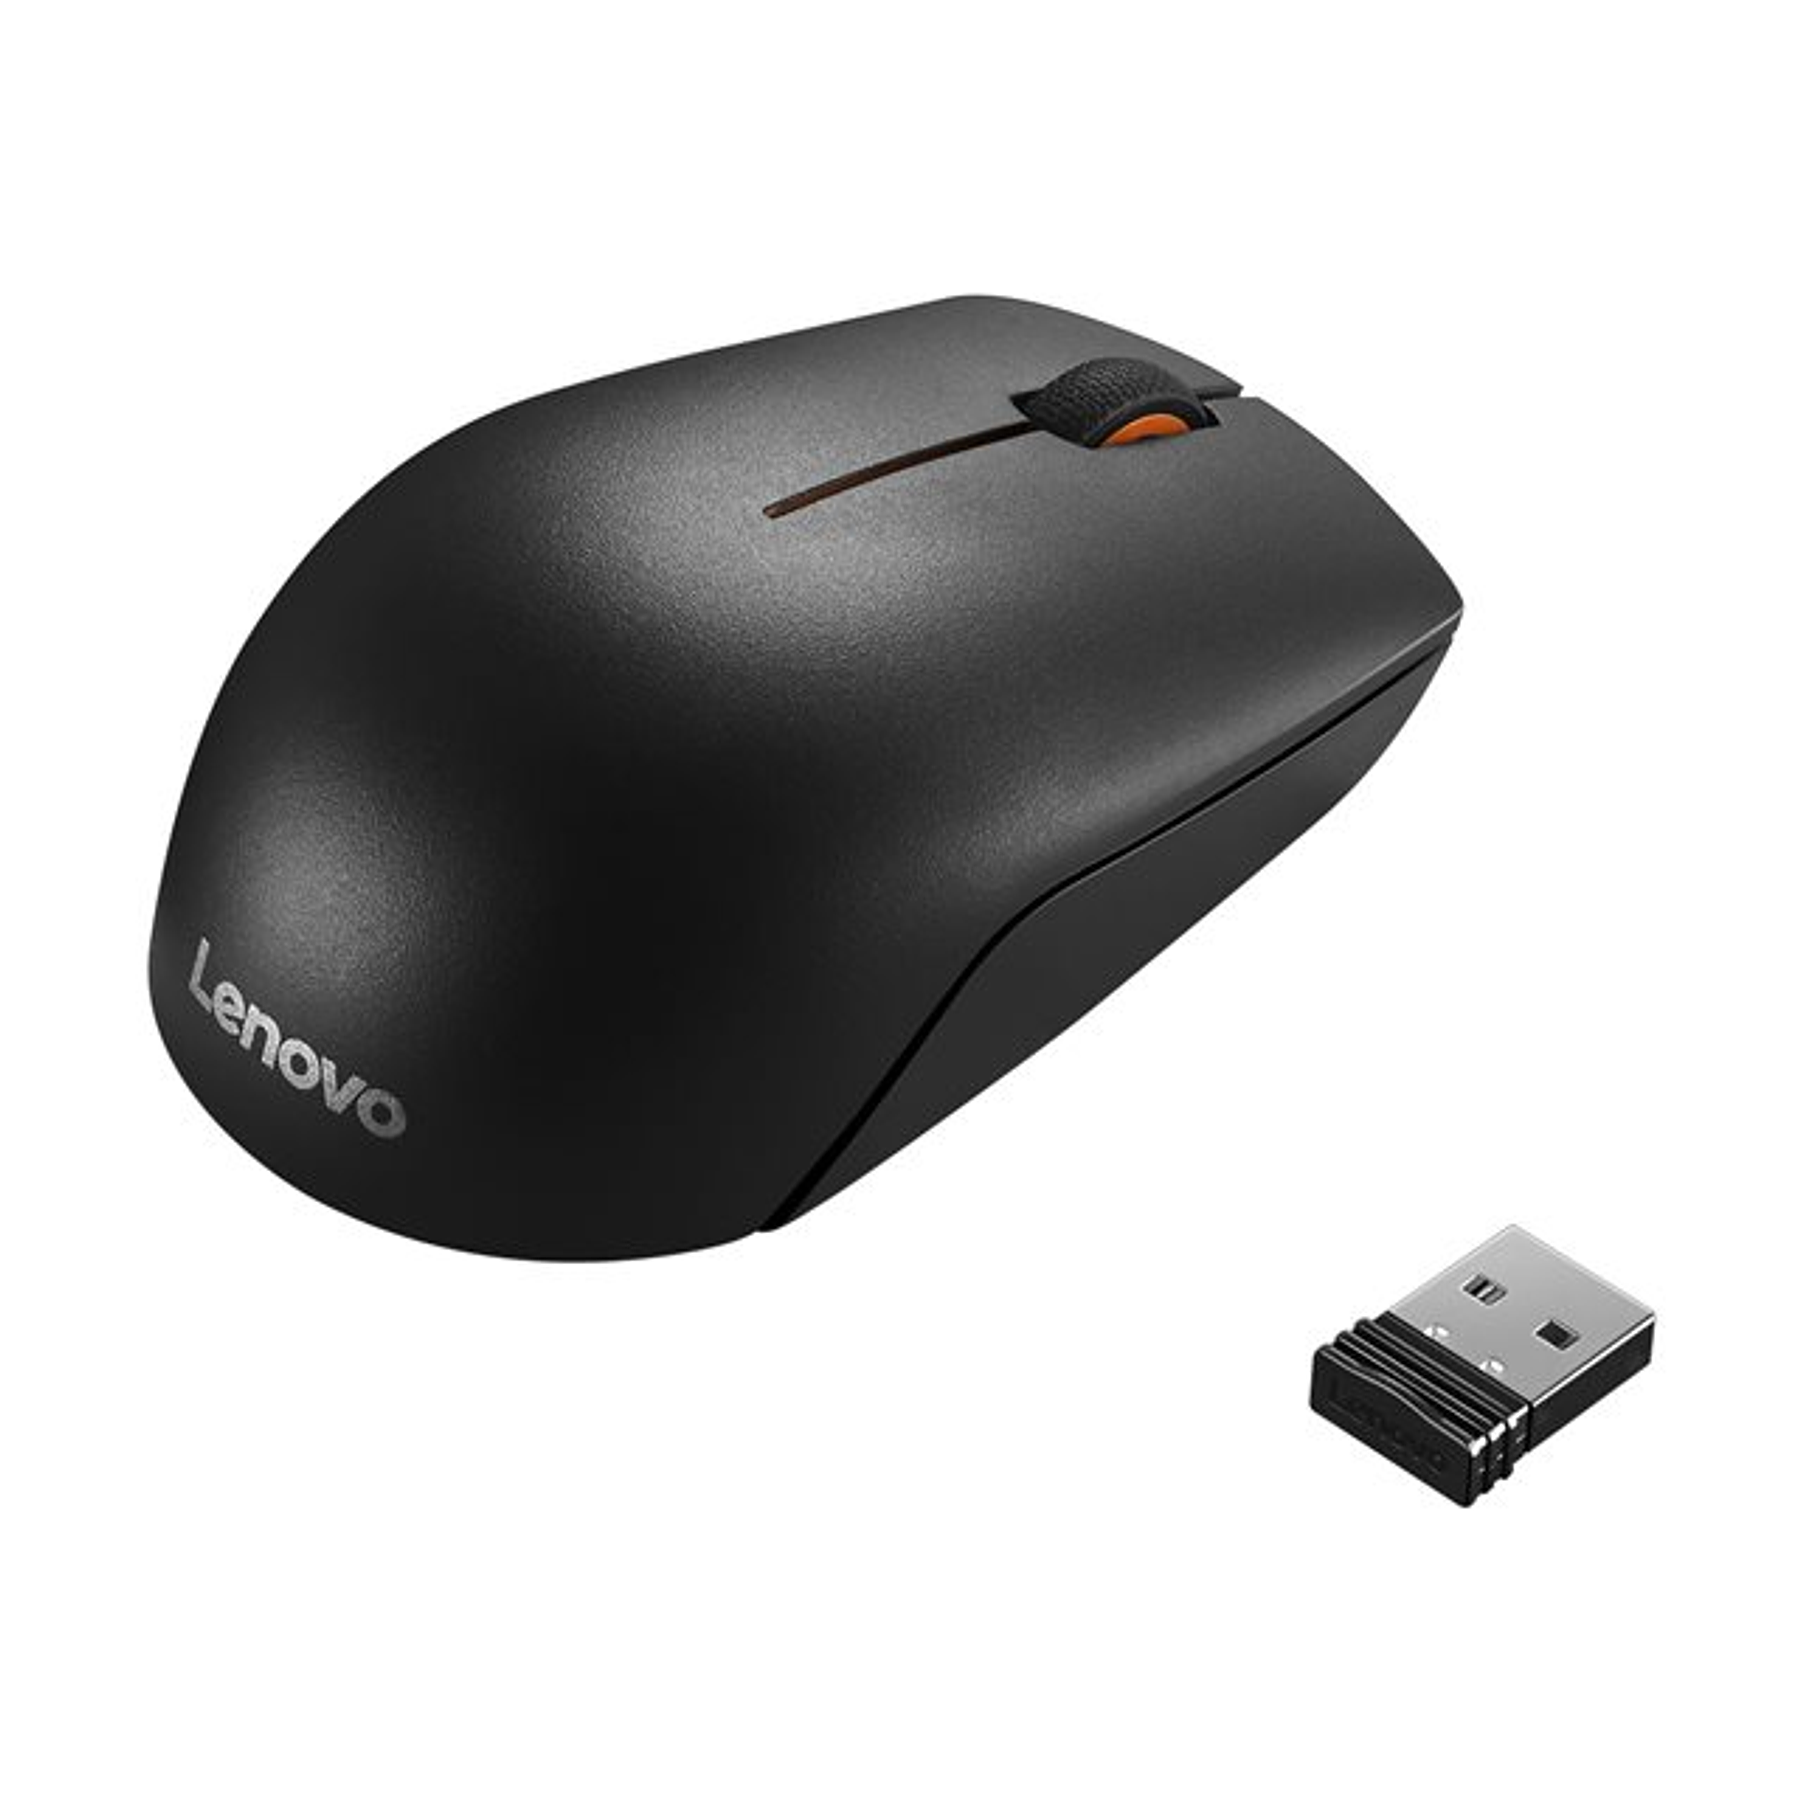 Lenovo Mouse 300 Wireless